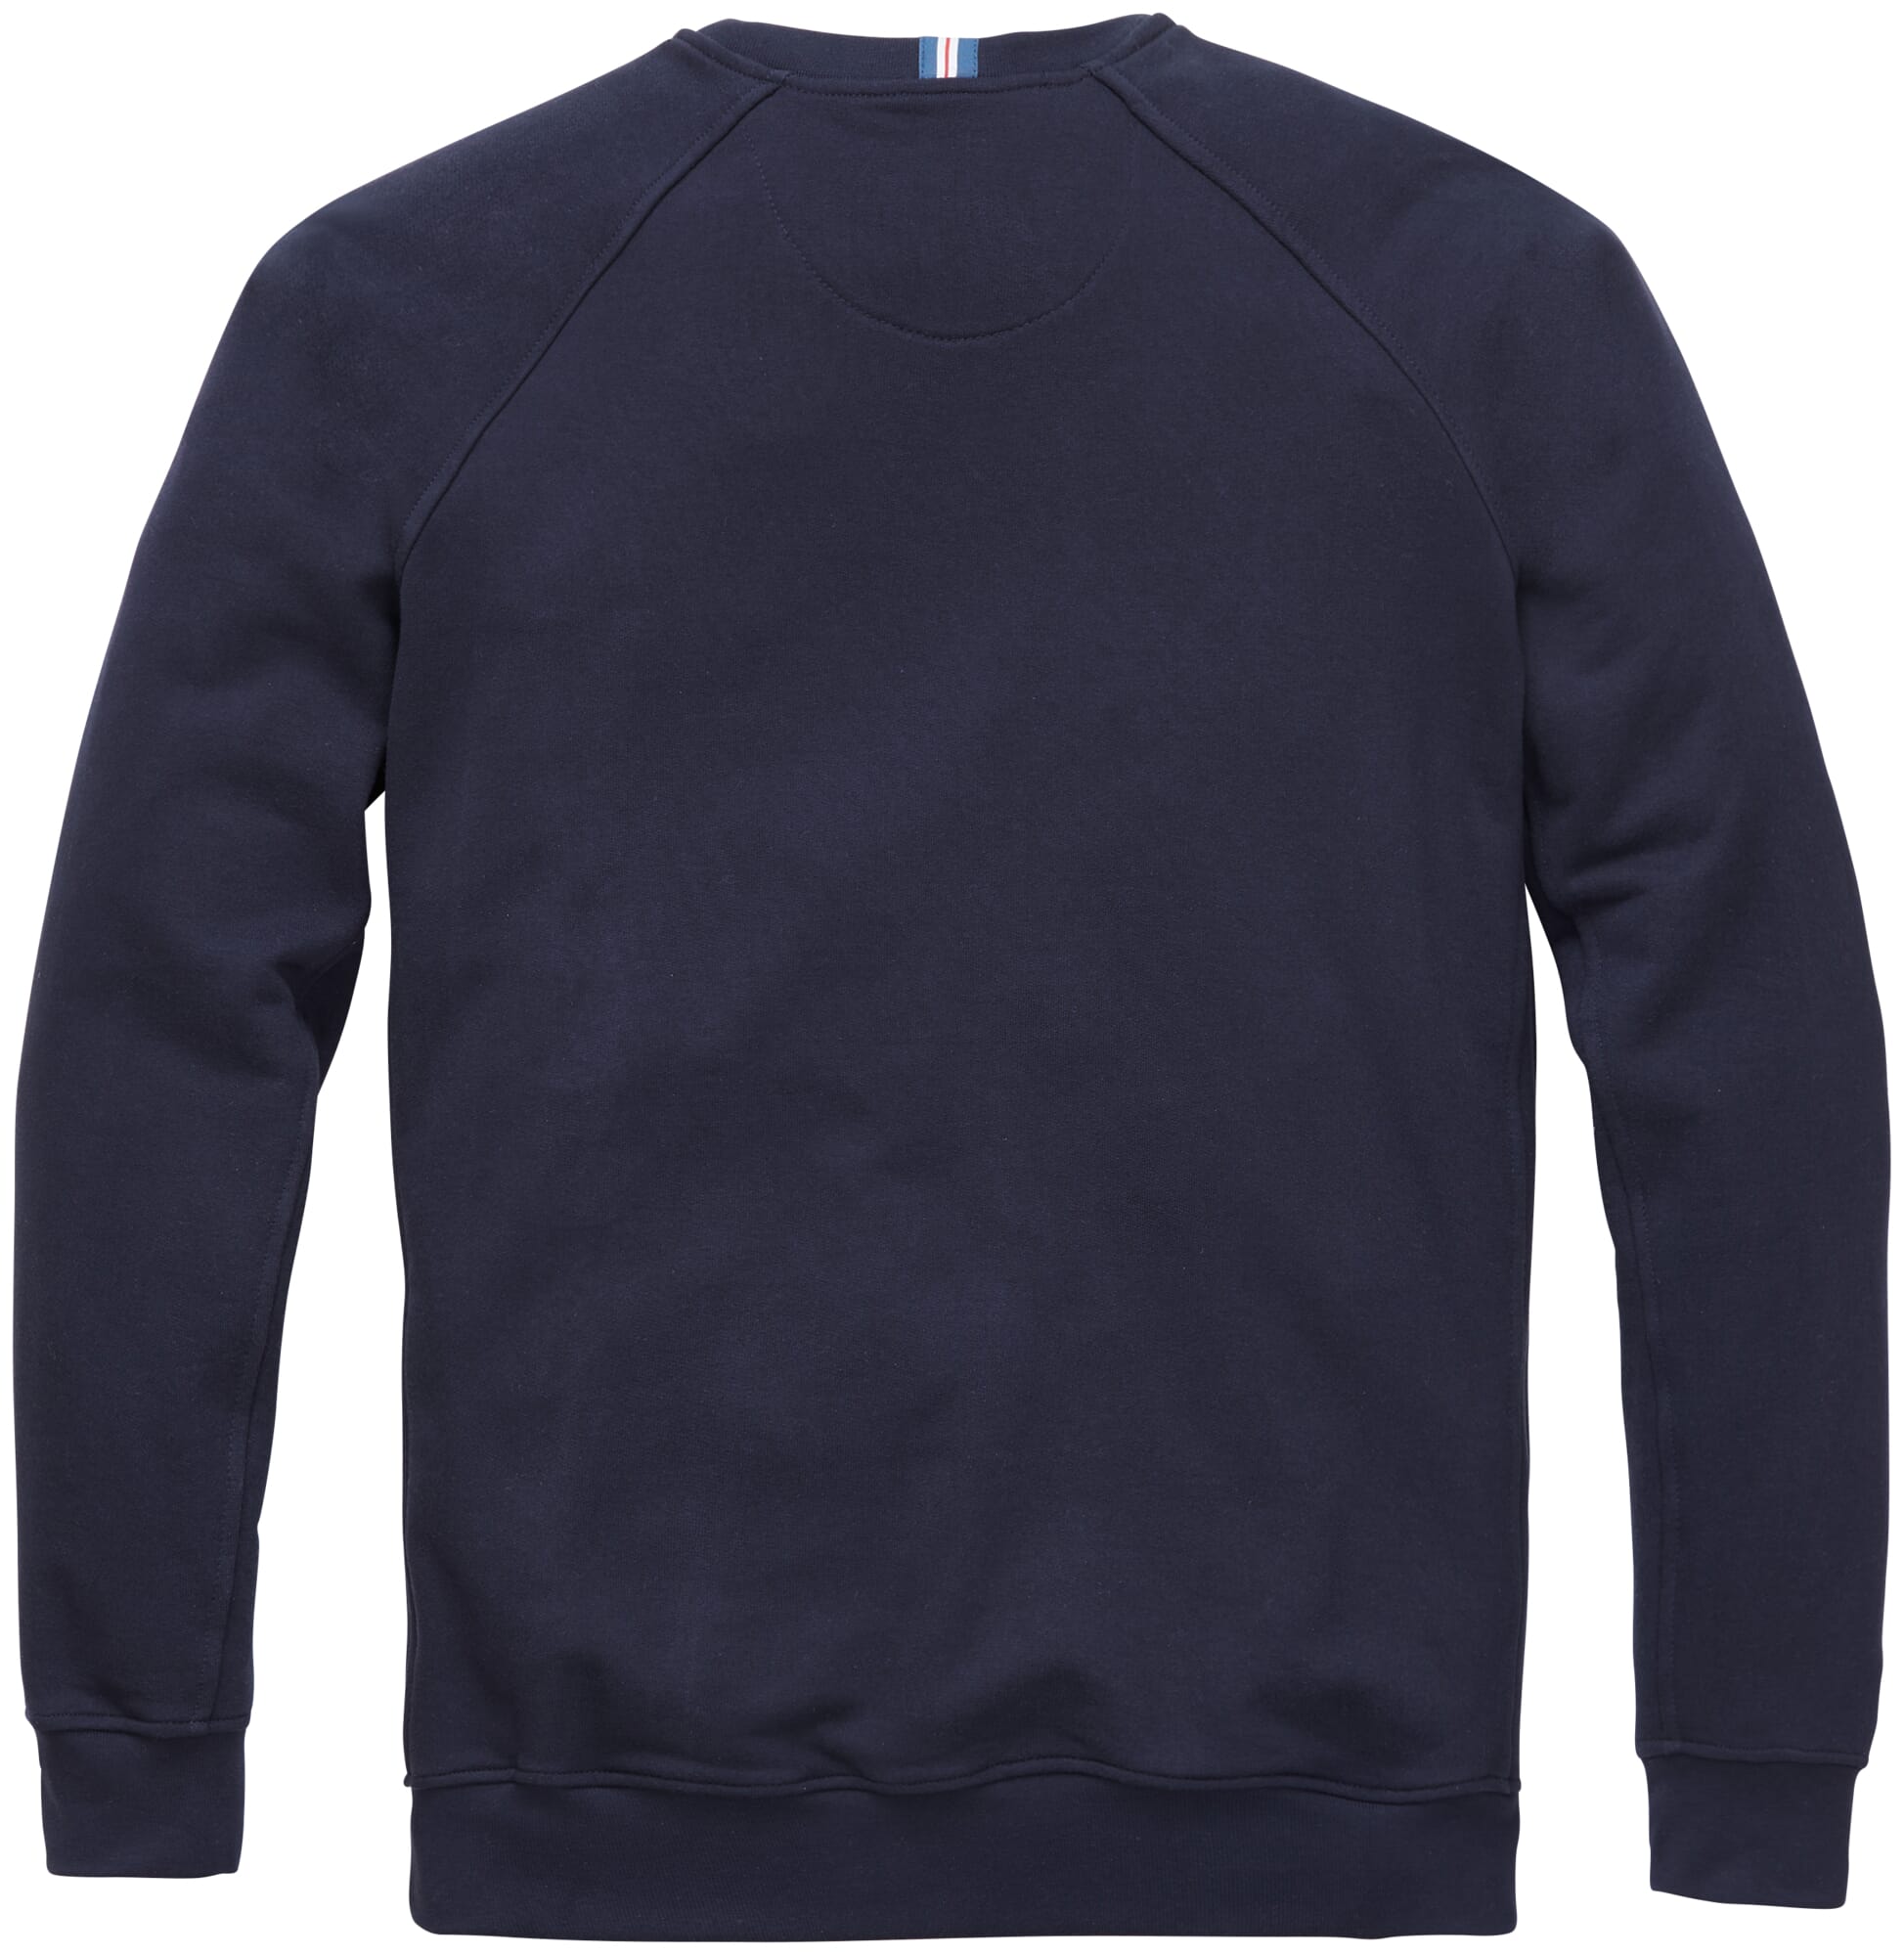 Men sweatshirt raglan, Dark blue | Manufactum | Sweatshirts